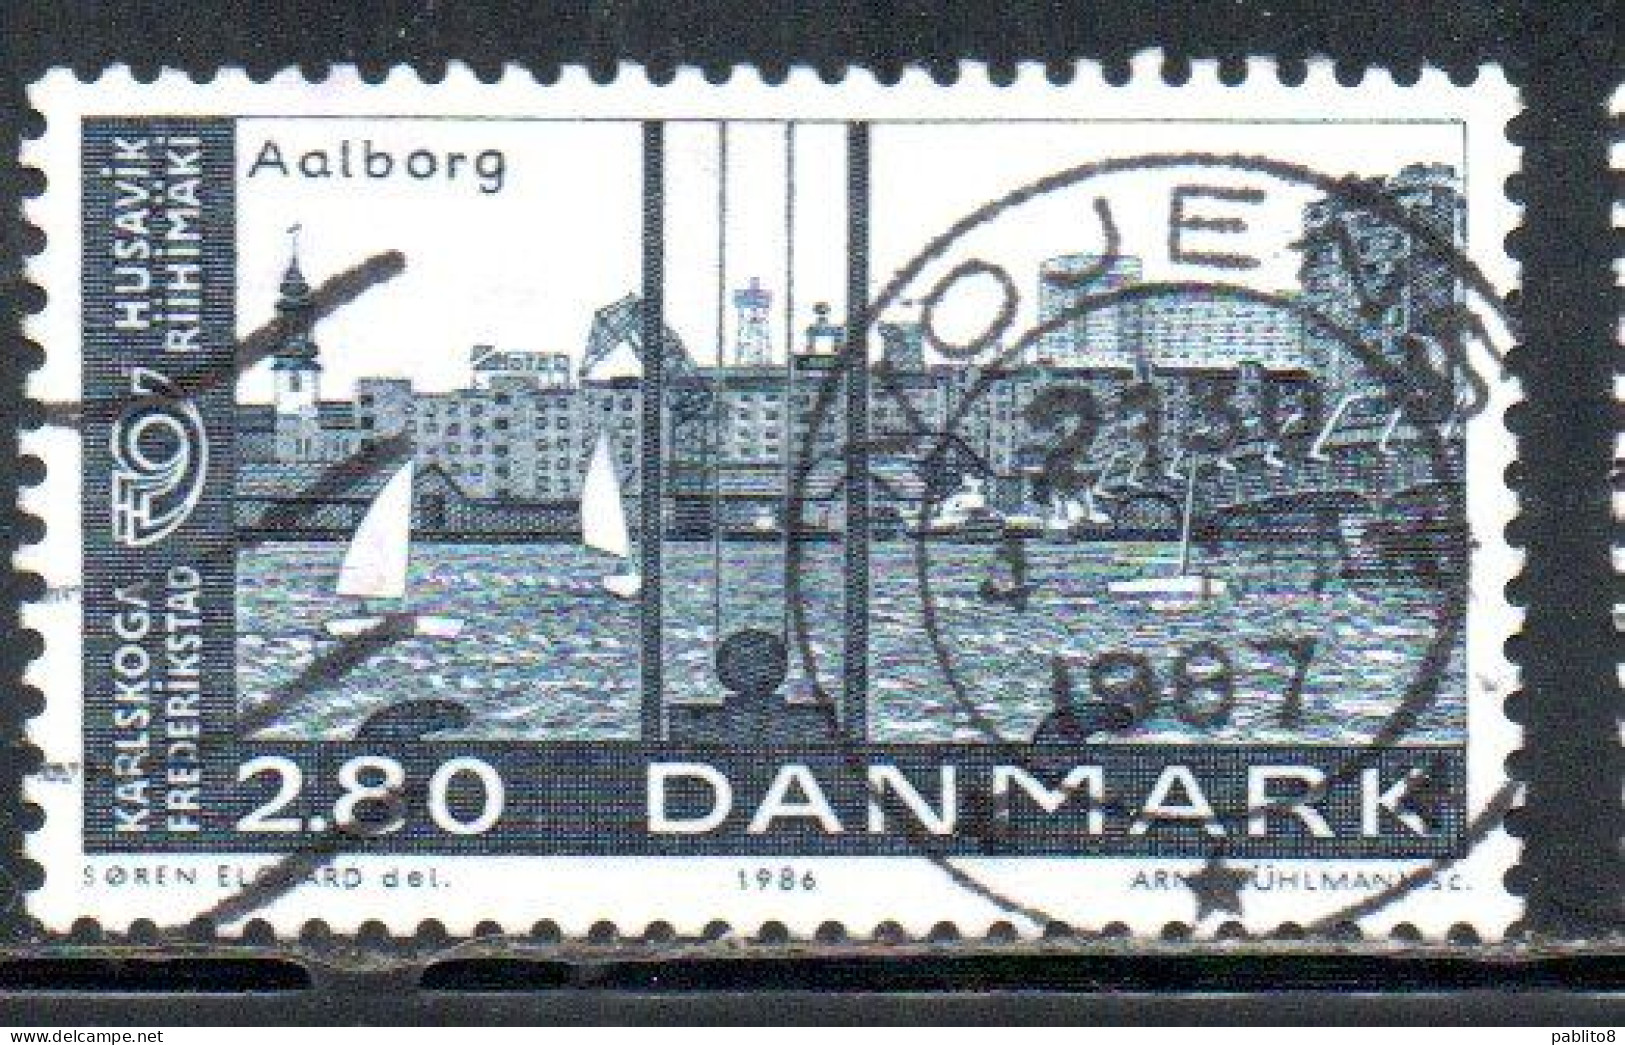 DANEMARK DANMARK DENMARK DANIMARCA 1986 NORDIC COOPERATION ISSUE SISTER TOWNS AALBORG HARBOR 2.80k USED USATO OBLITERE' - Used Stamps